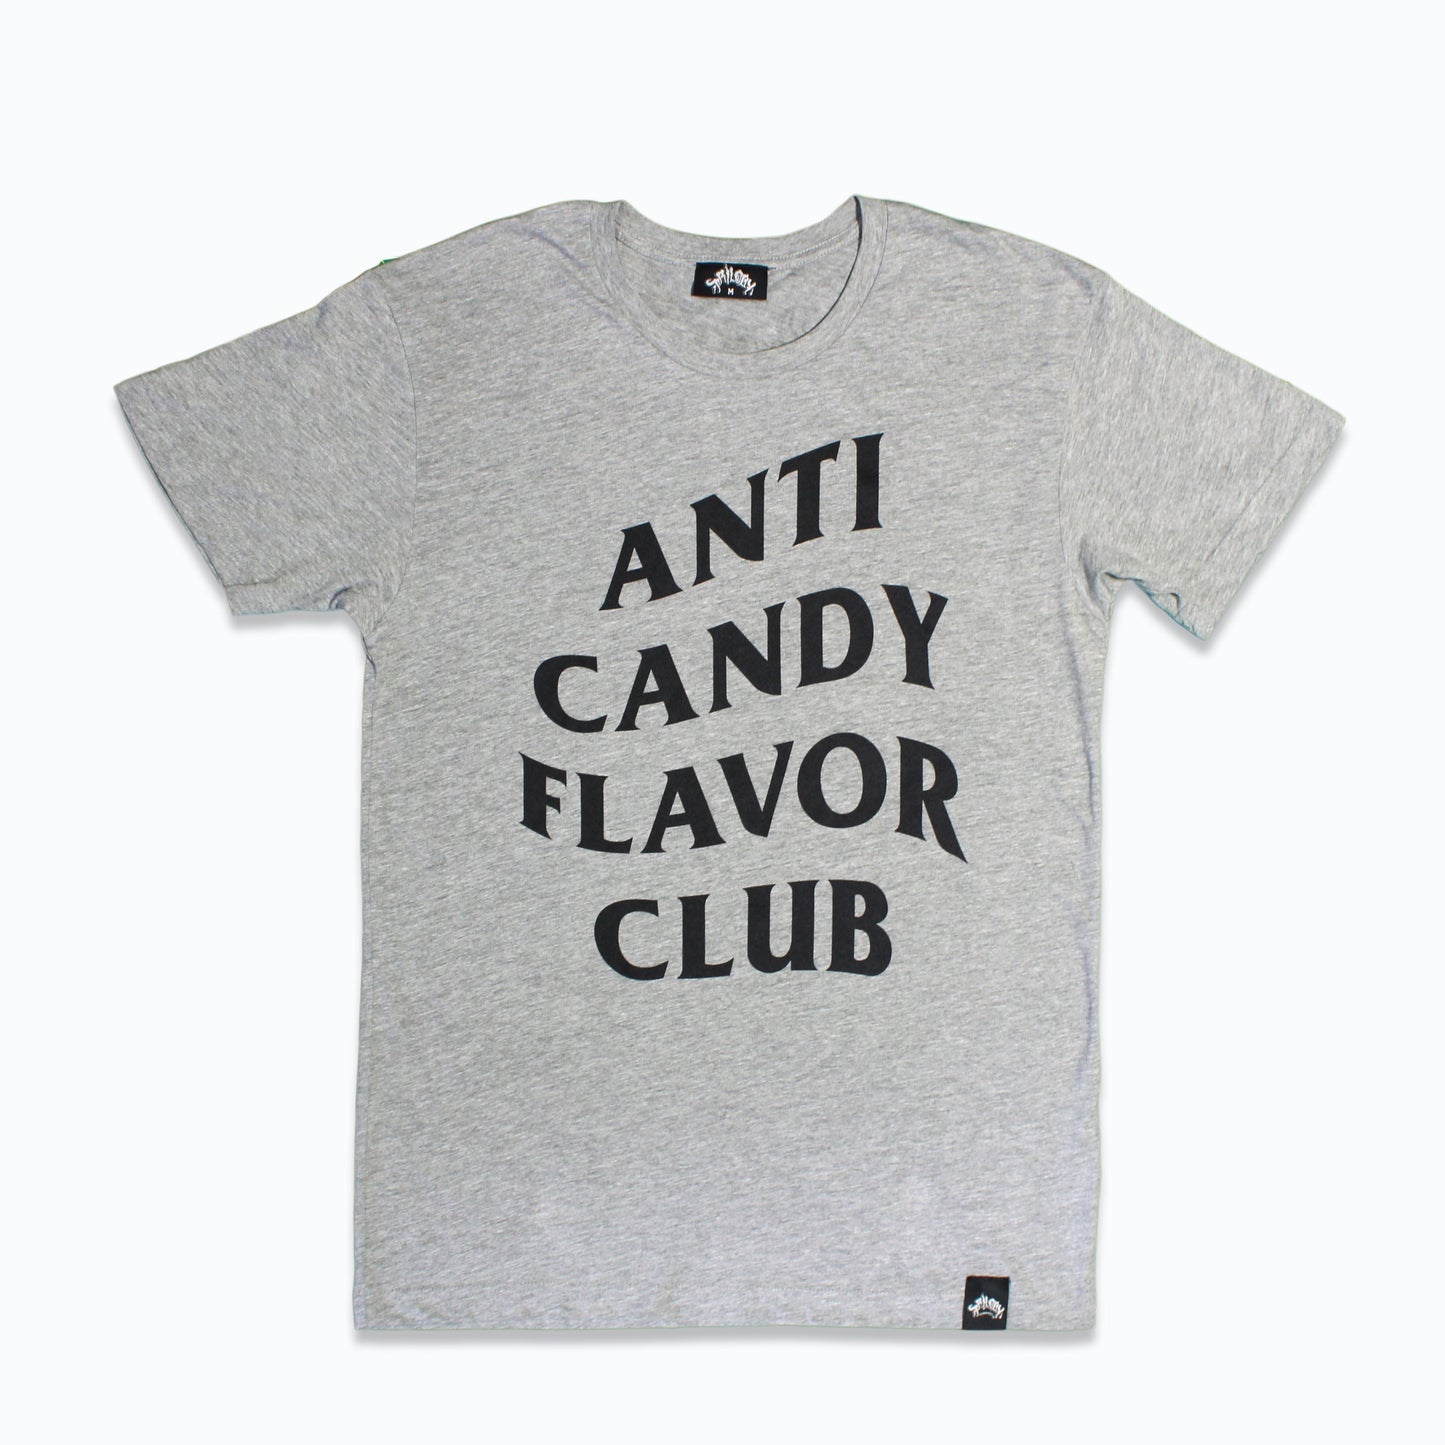 TRILOGY "ANTI CANDY FLAVOR CLUB" GREY/BLACK T-SHIRT